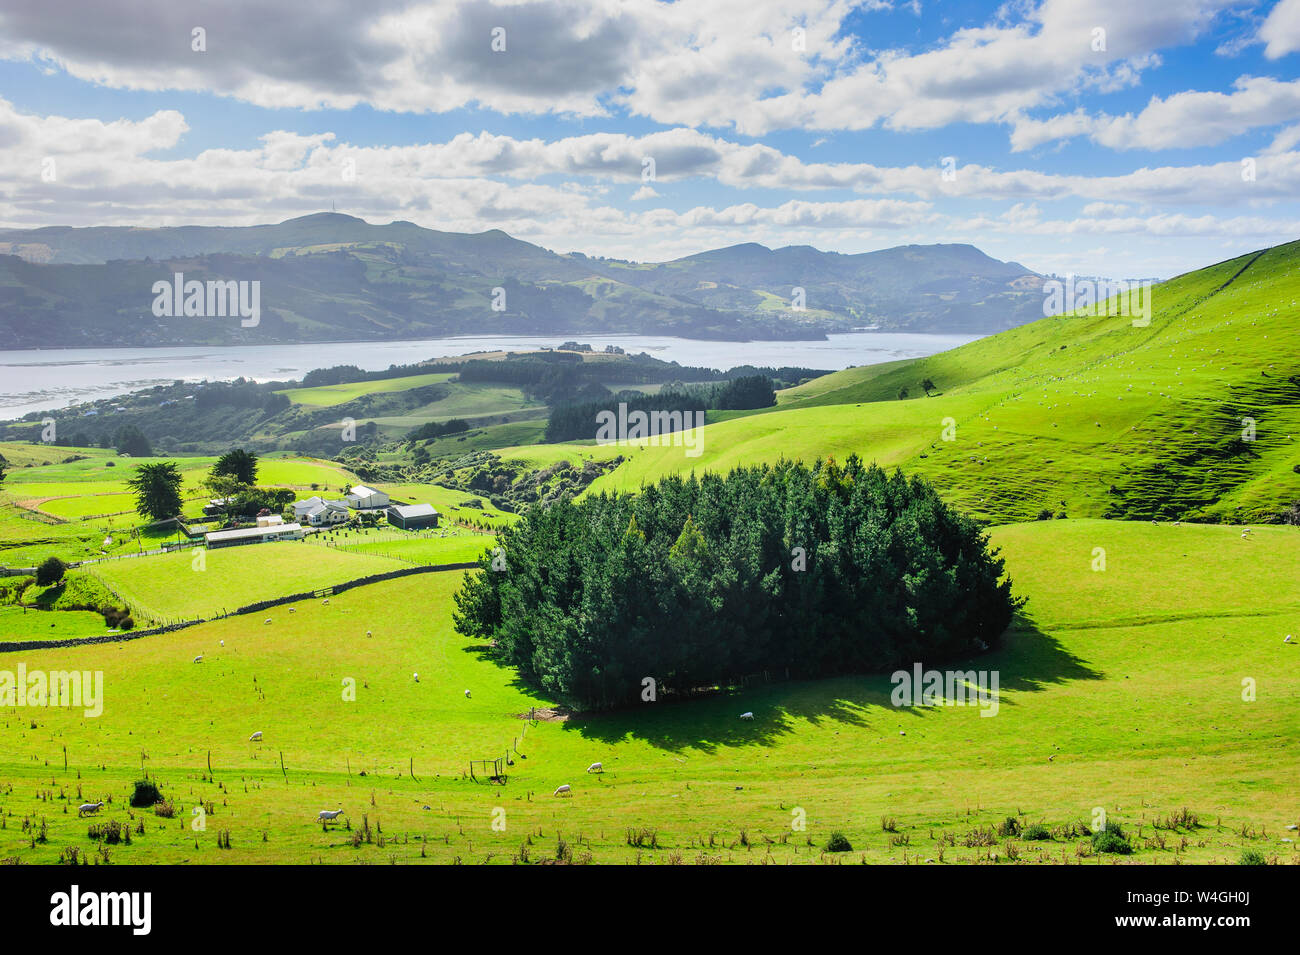 Lush green fields with grazing sheep, Otago peninsula, South Island, New Zealand Stock Photo